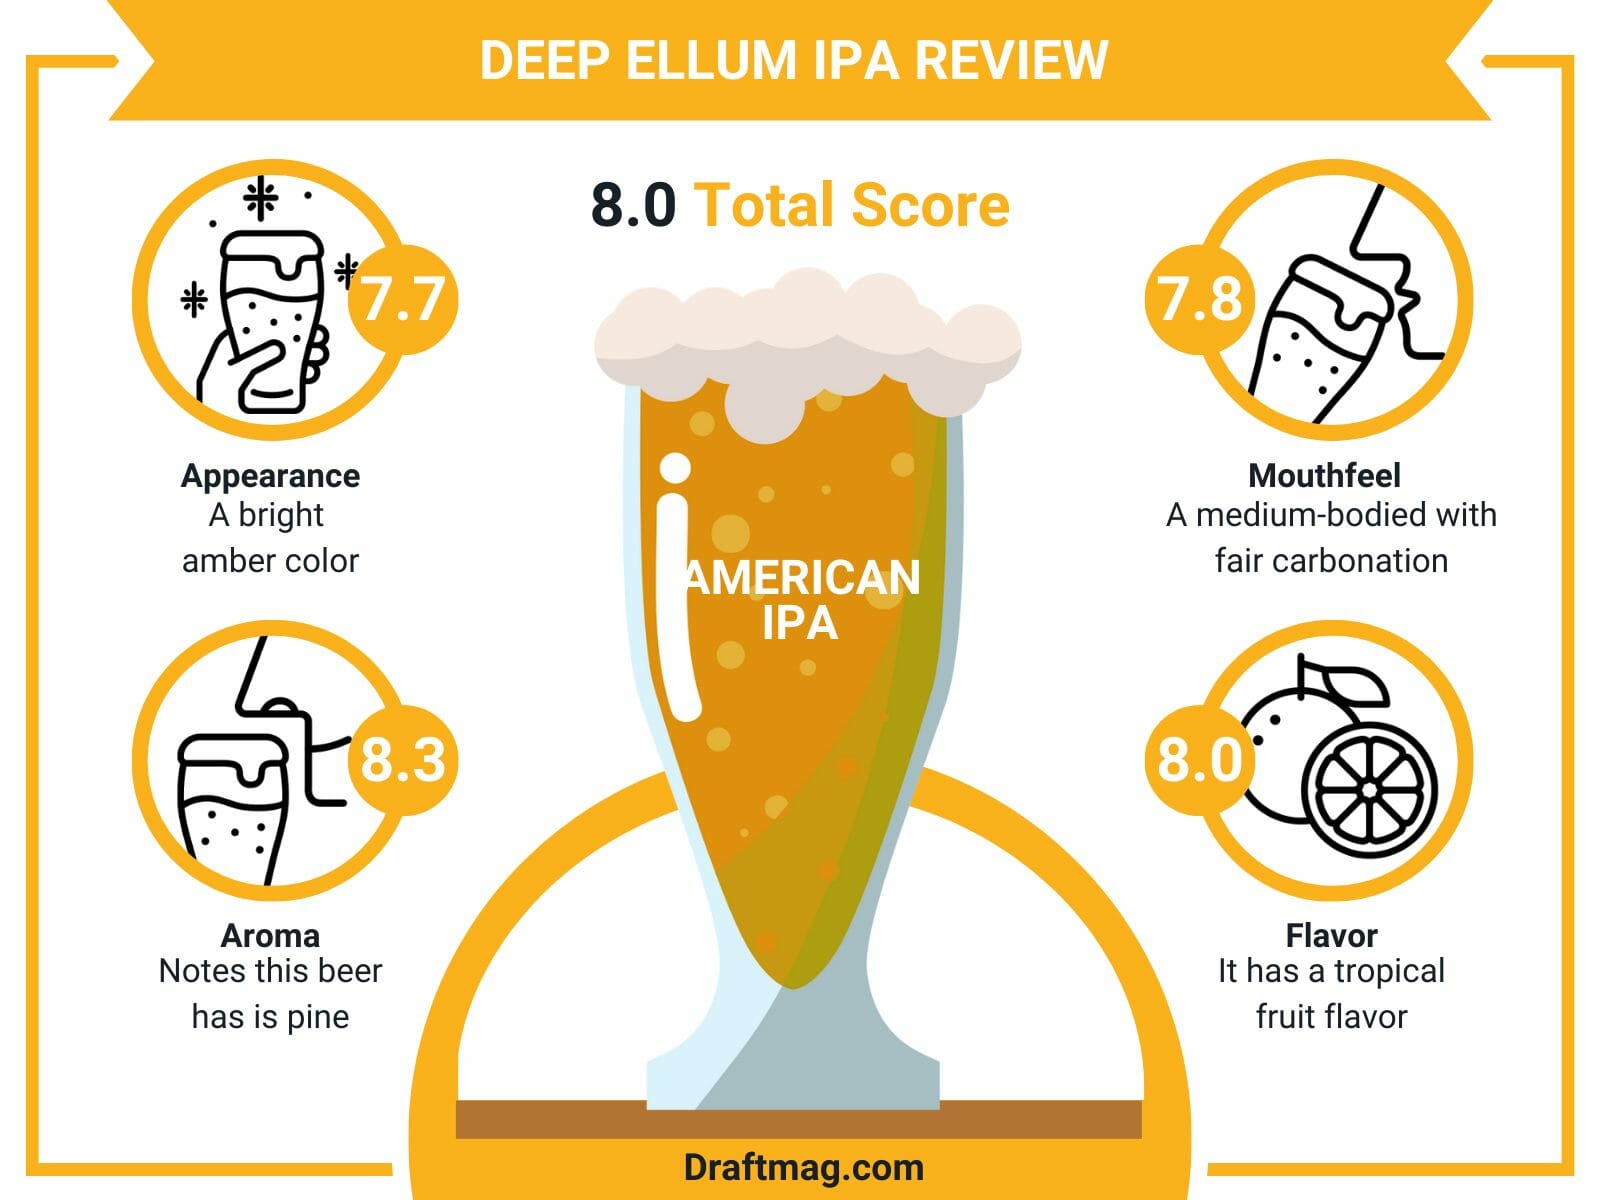 Deep ellum ipa review infographic